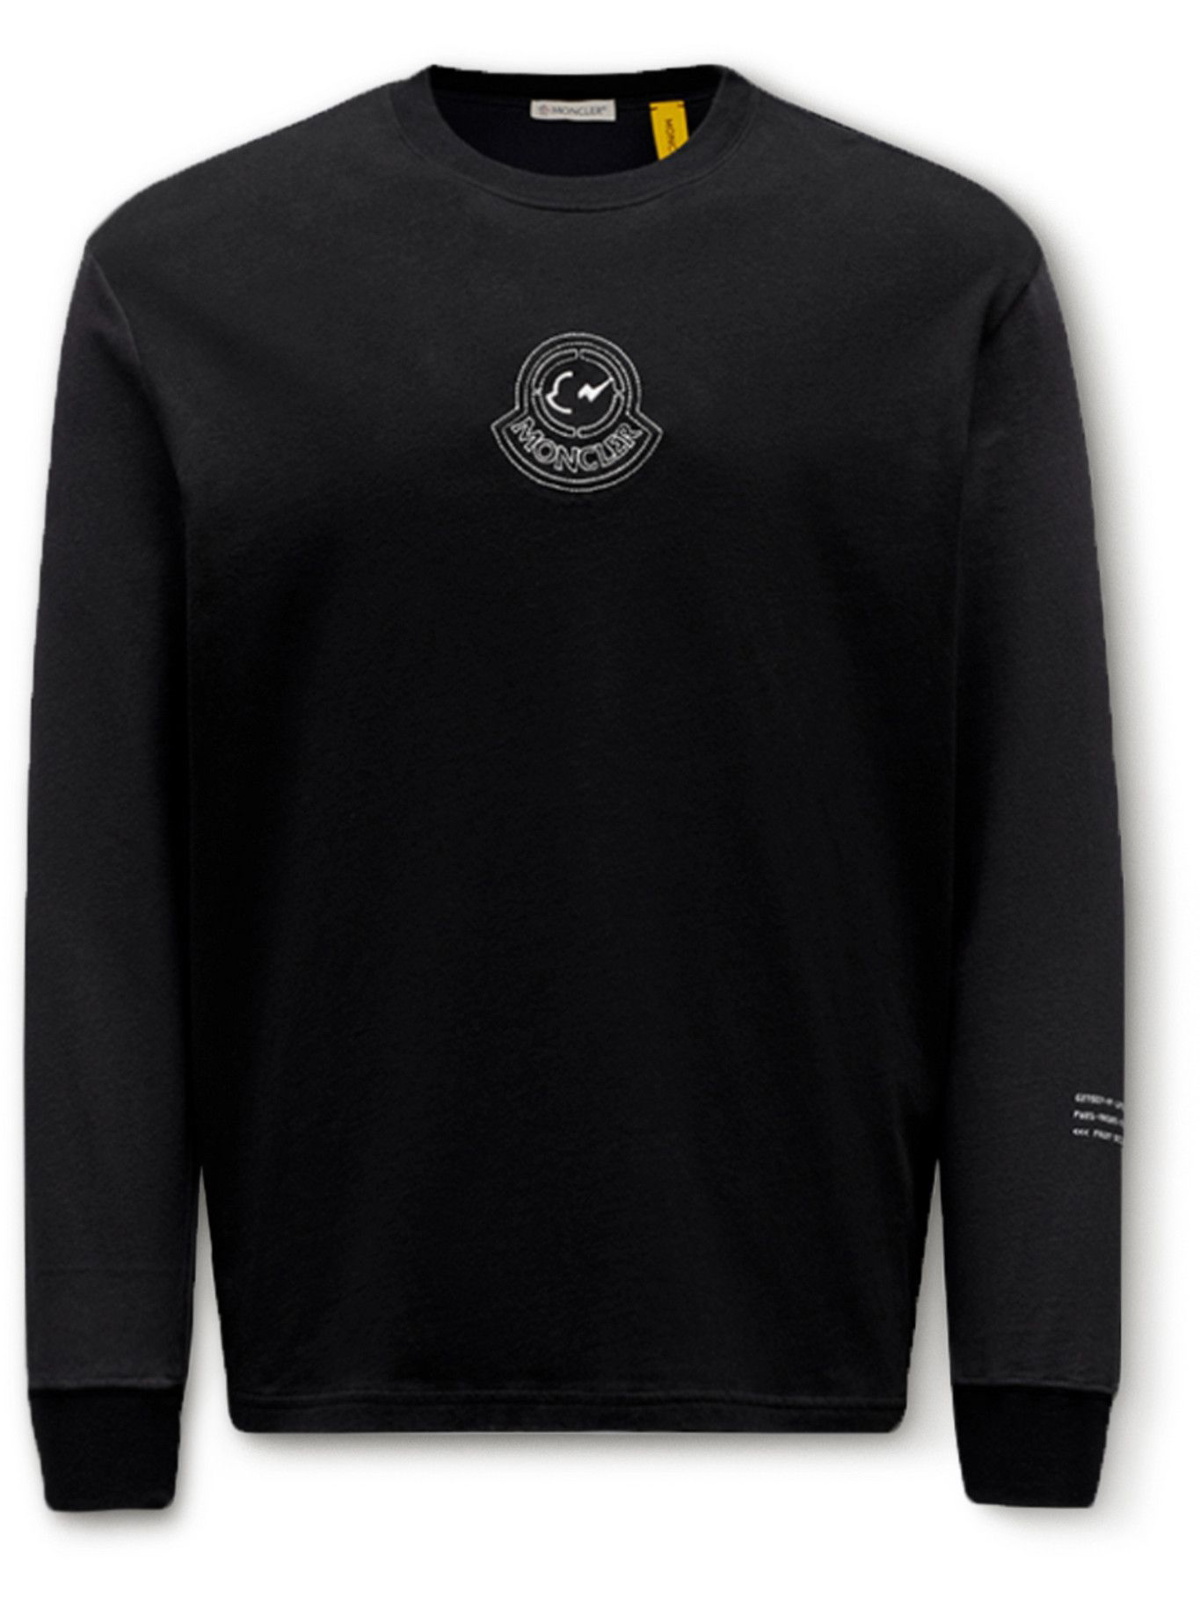 Moncler Genius - Fragment 7 Printed Cotton-Jersey T-Shirt - Black